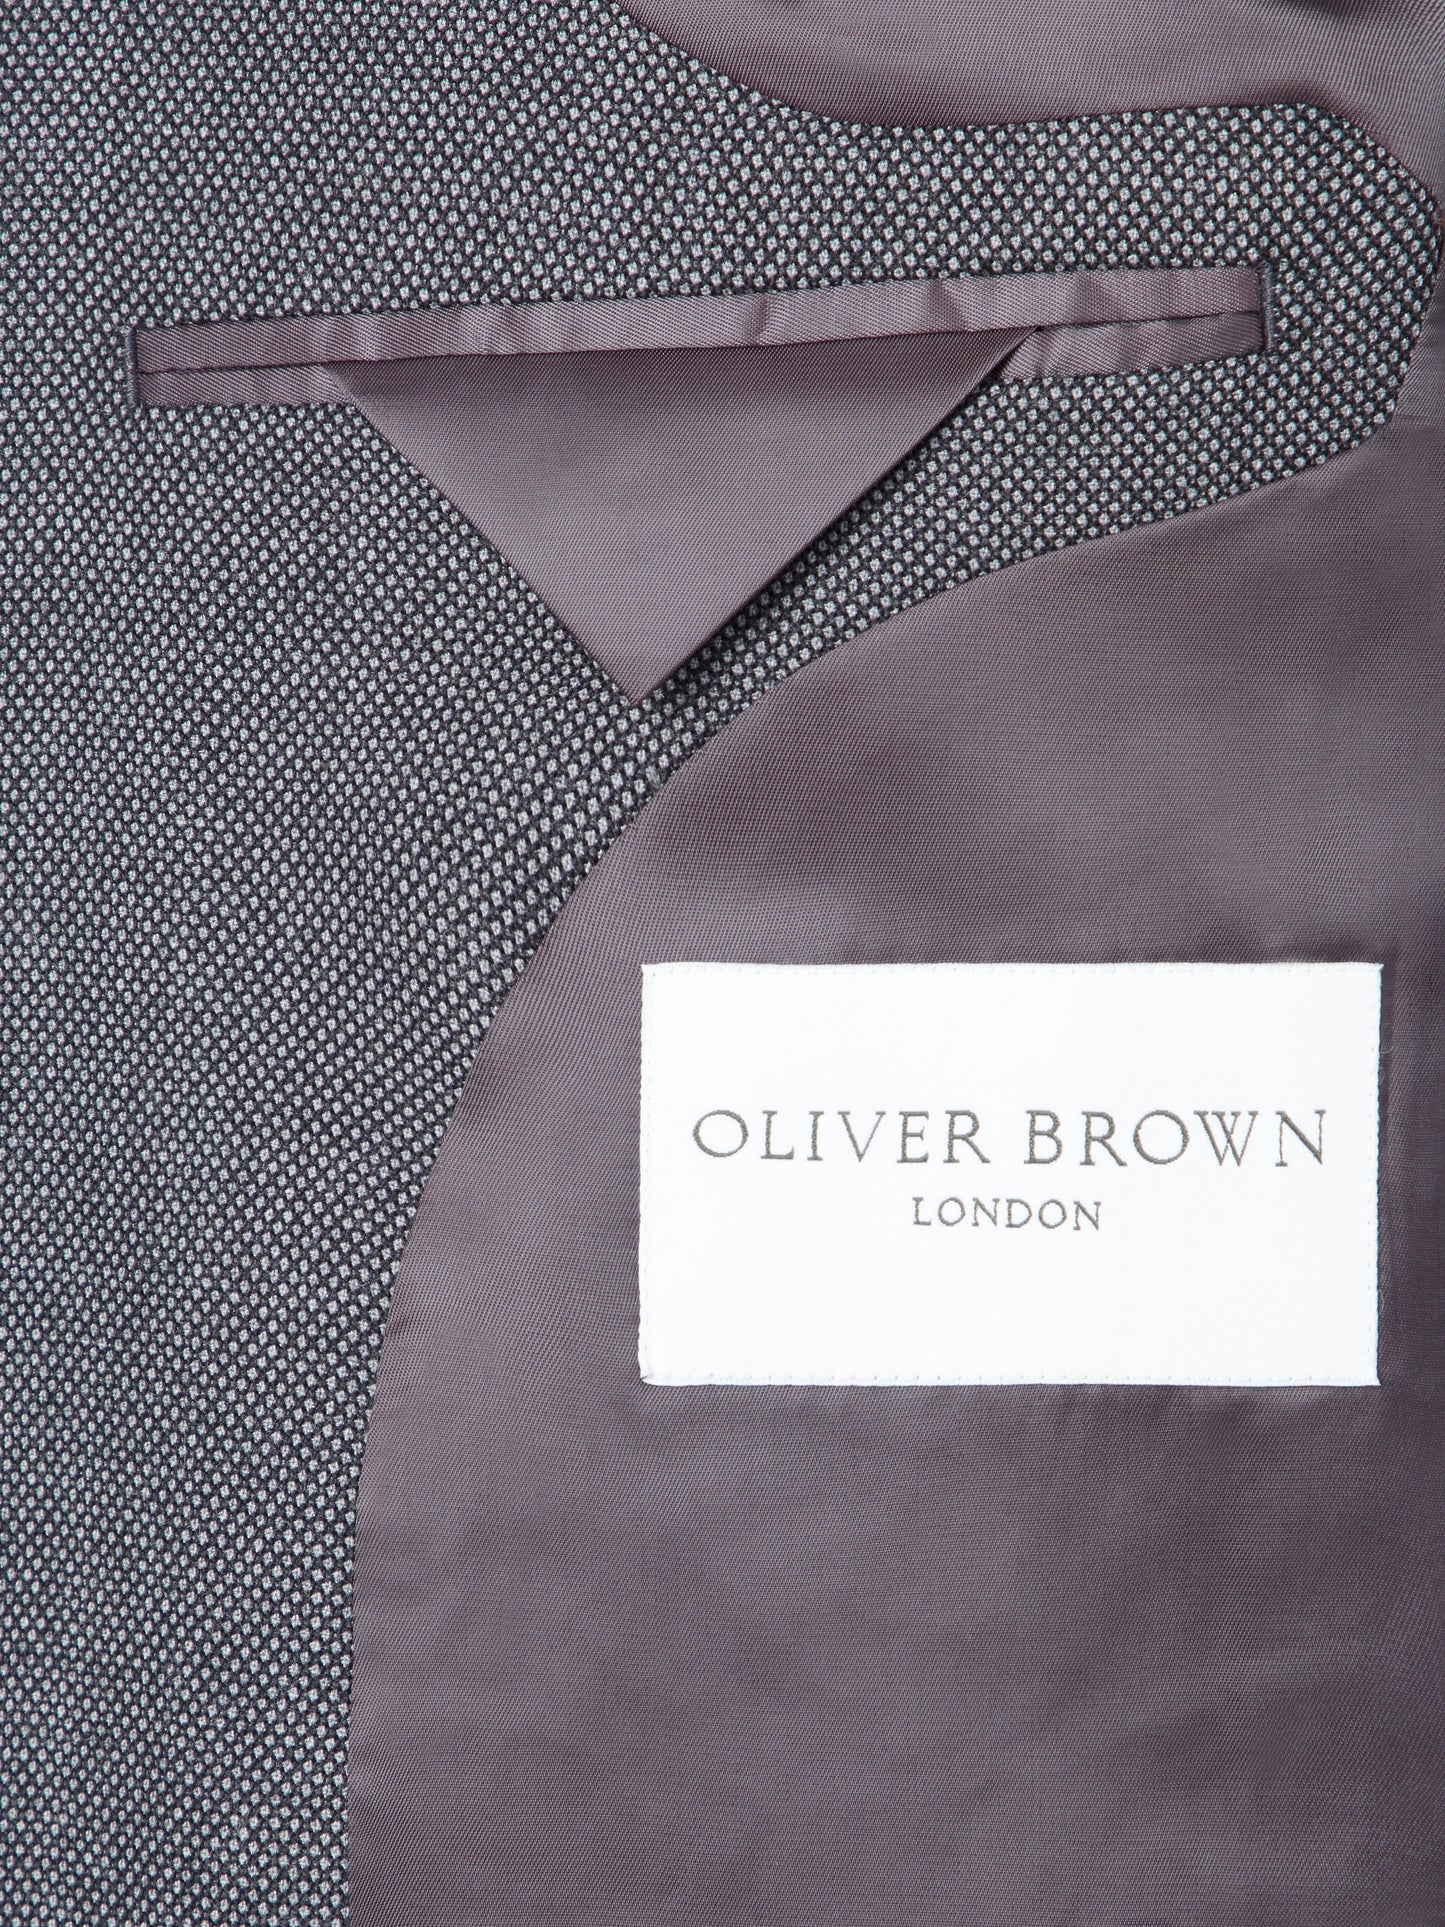 Limited Edition Eaton Suit - Lightweight Grey Birdseye